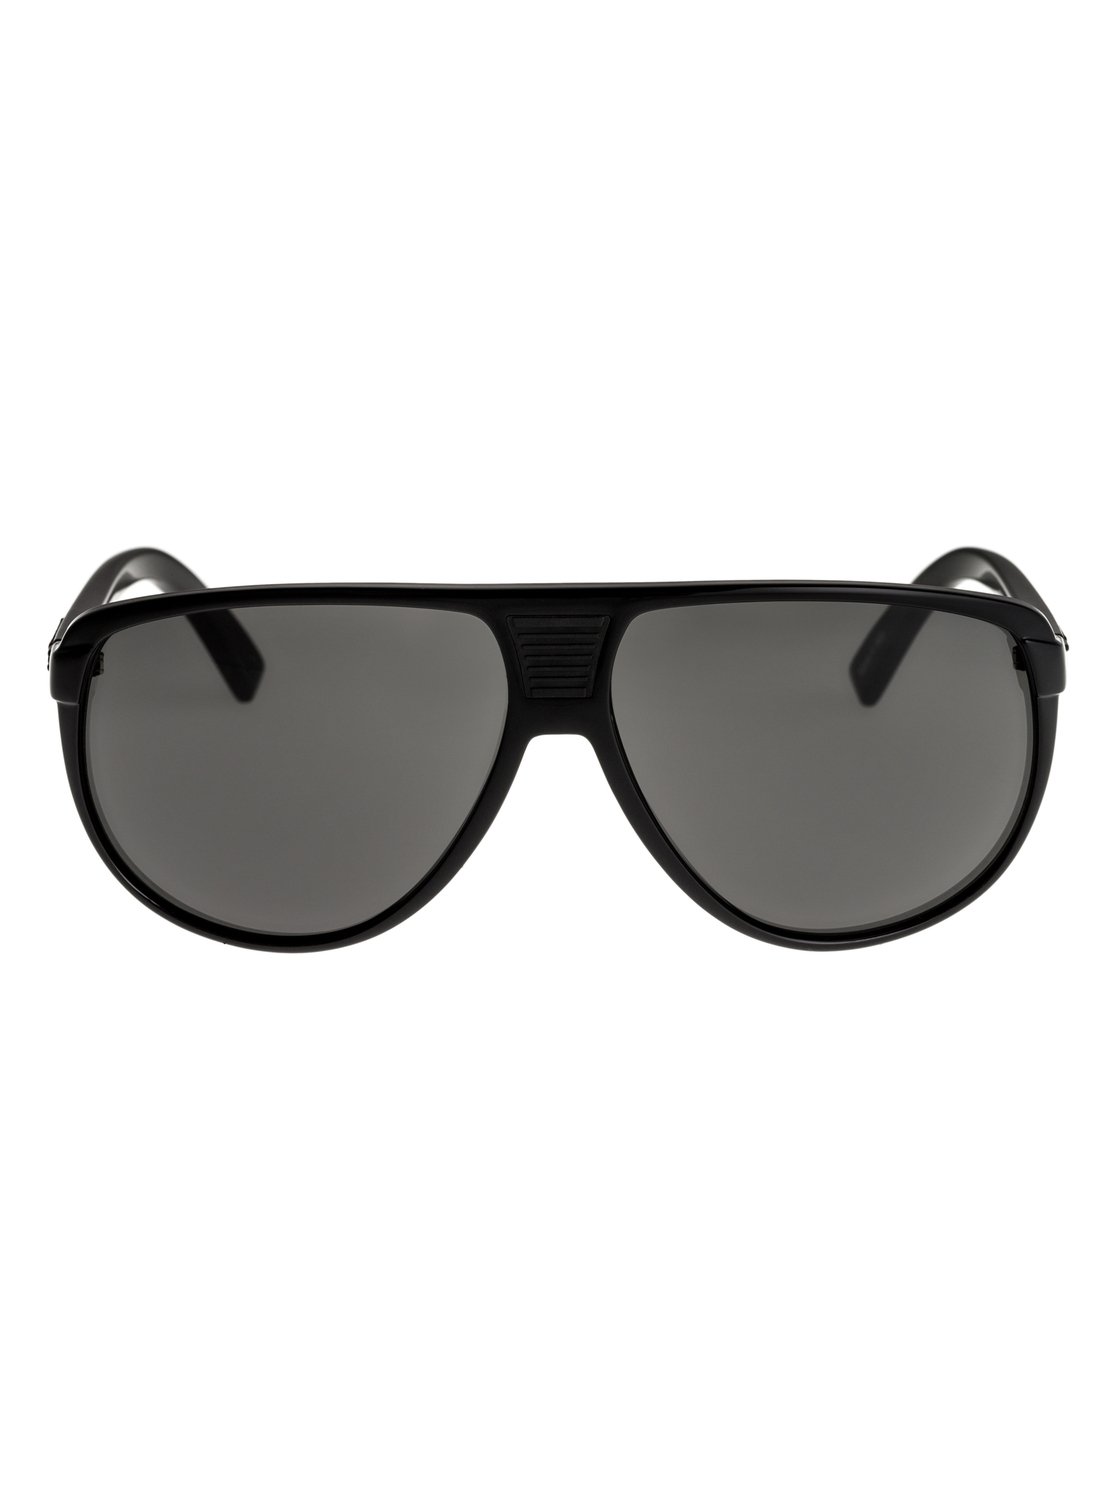 QUIKSILVER™ Men's Sunglasses Carl Zeiss Vision category 3 polycarbonate ...